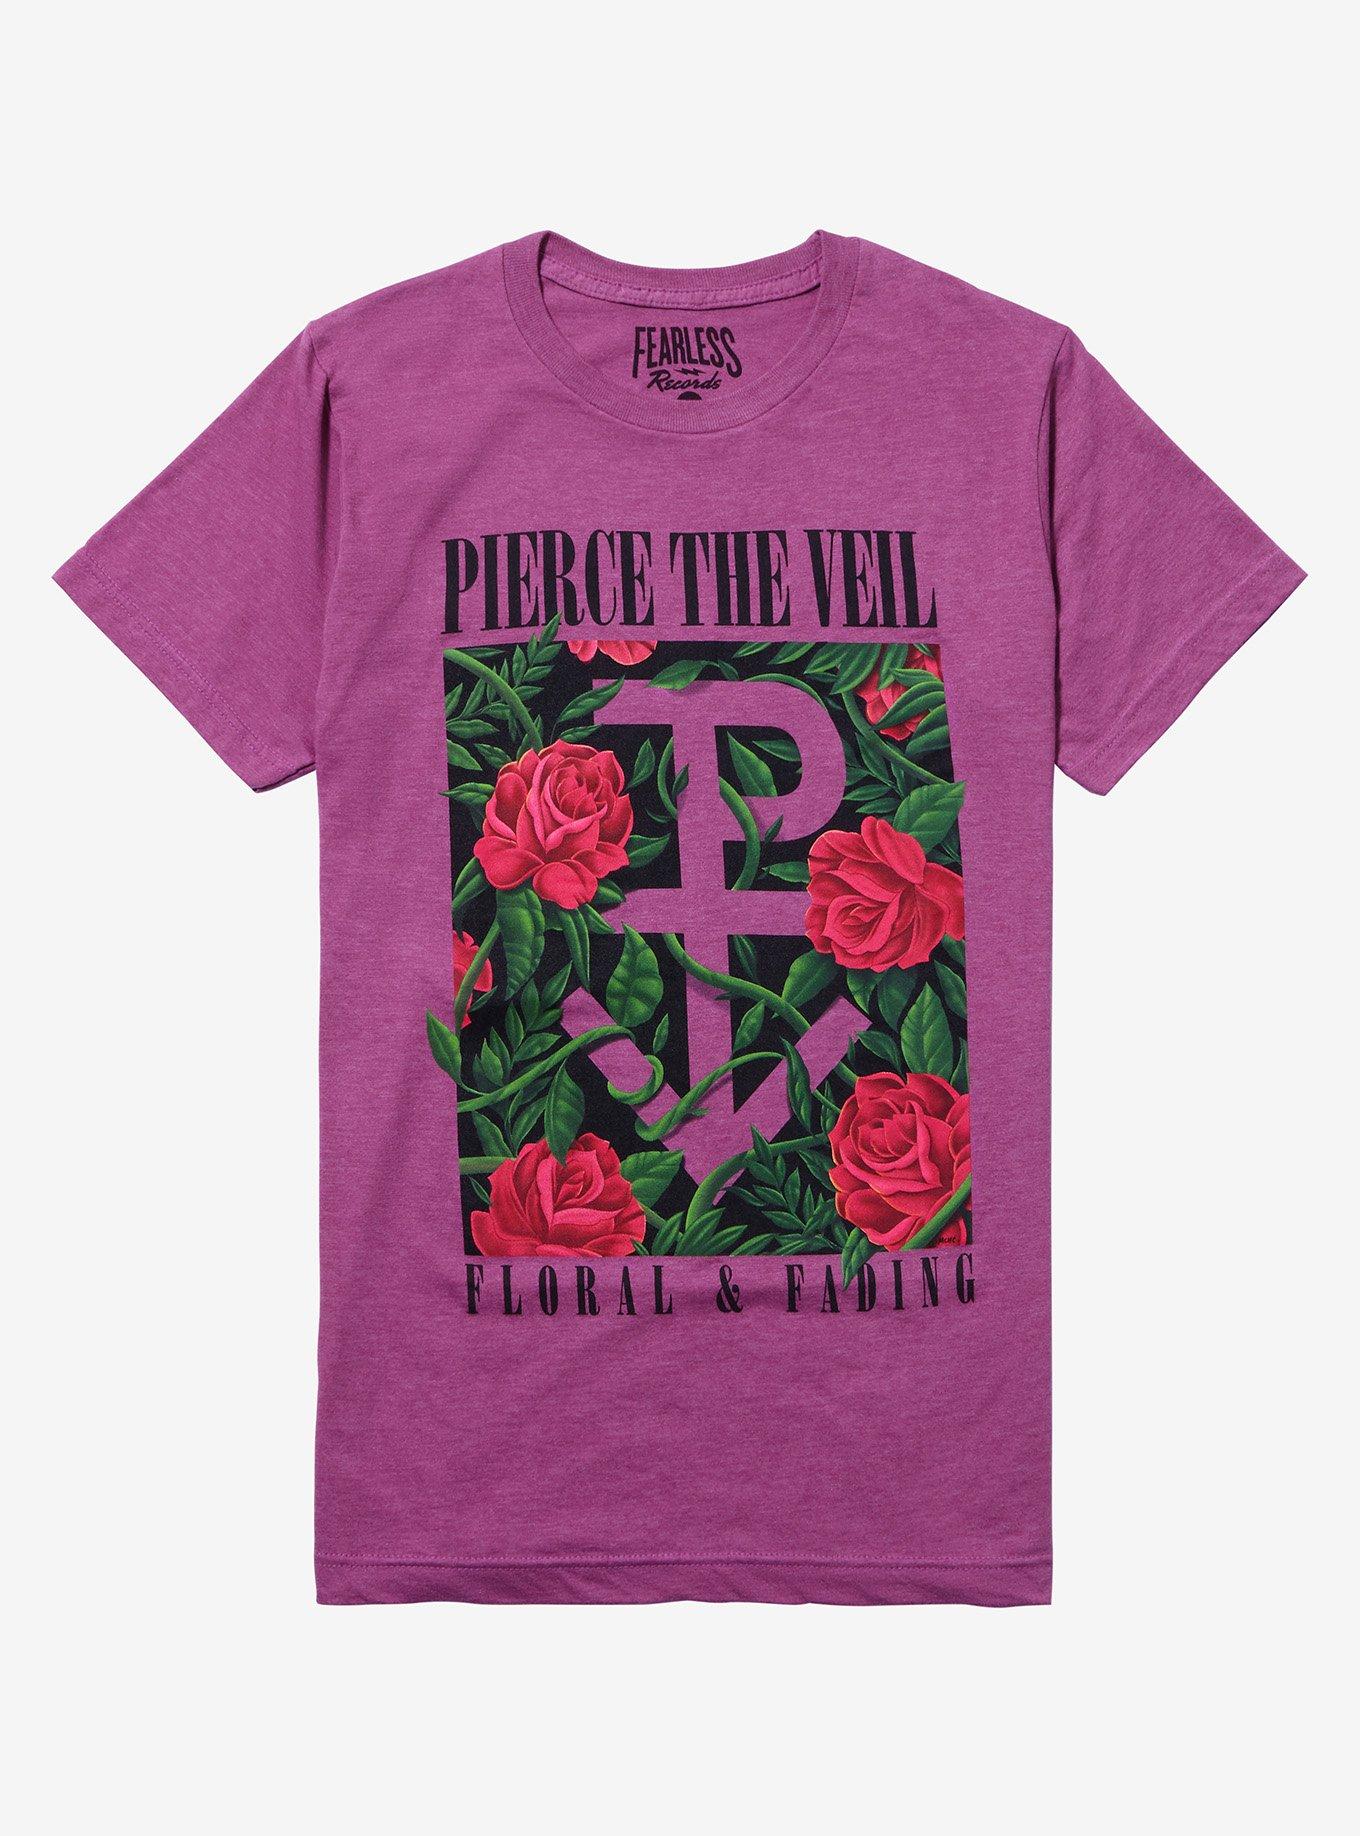 Pierce The Veil Floral & Fading Boyfriend Fit Girls T-Shirt